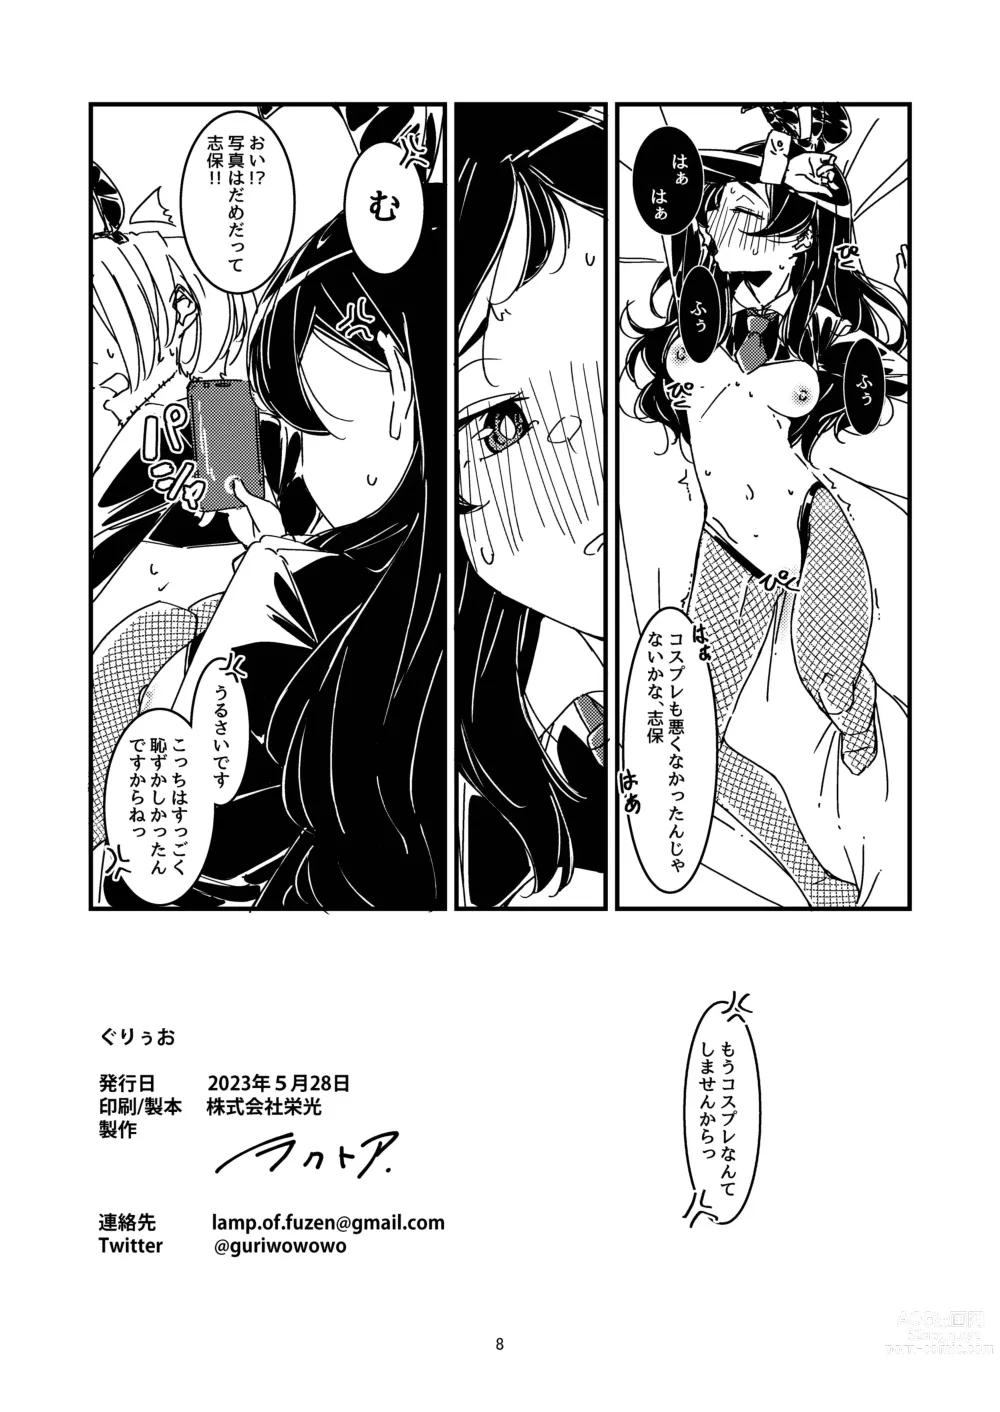 Page 45 of doujinshi Kuroneko no Kyouji + Aruhi no Kuro Usagi